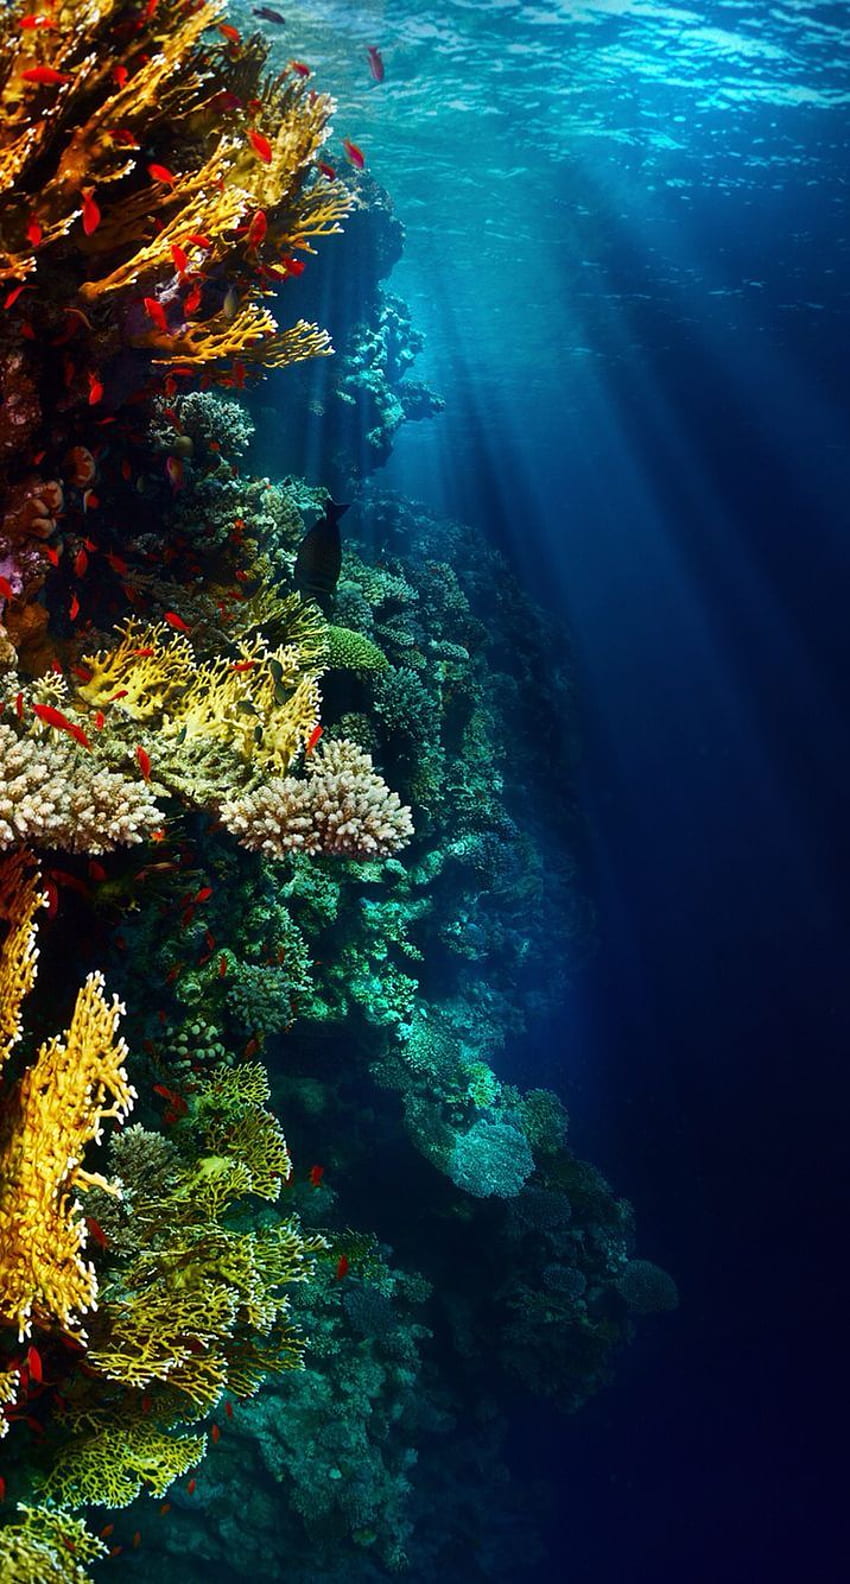 Amazing Underwater Reef - Latar Belakang iPhone Terumbu Karang, iPhone Lautan Bawah Laut wallpaper ponsel HD